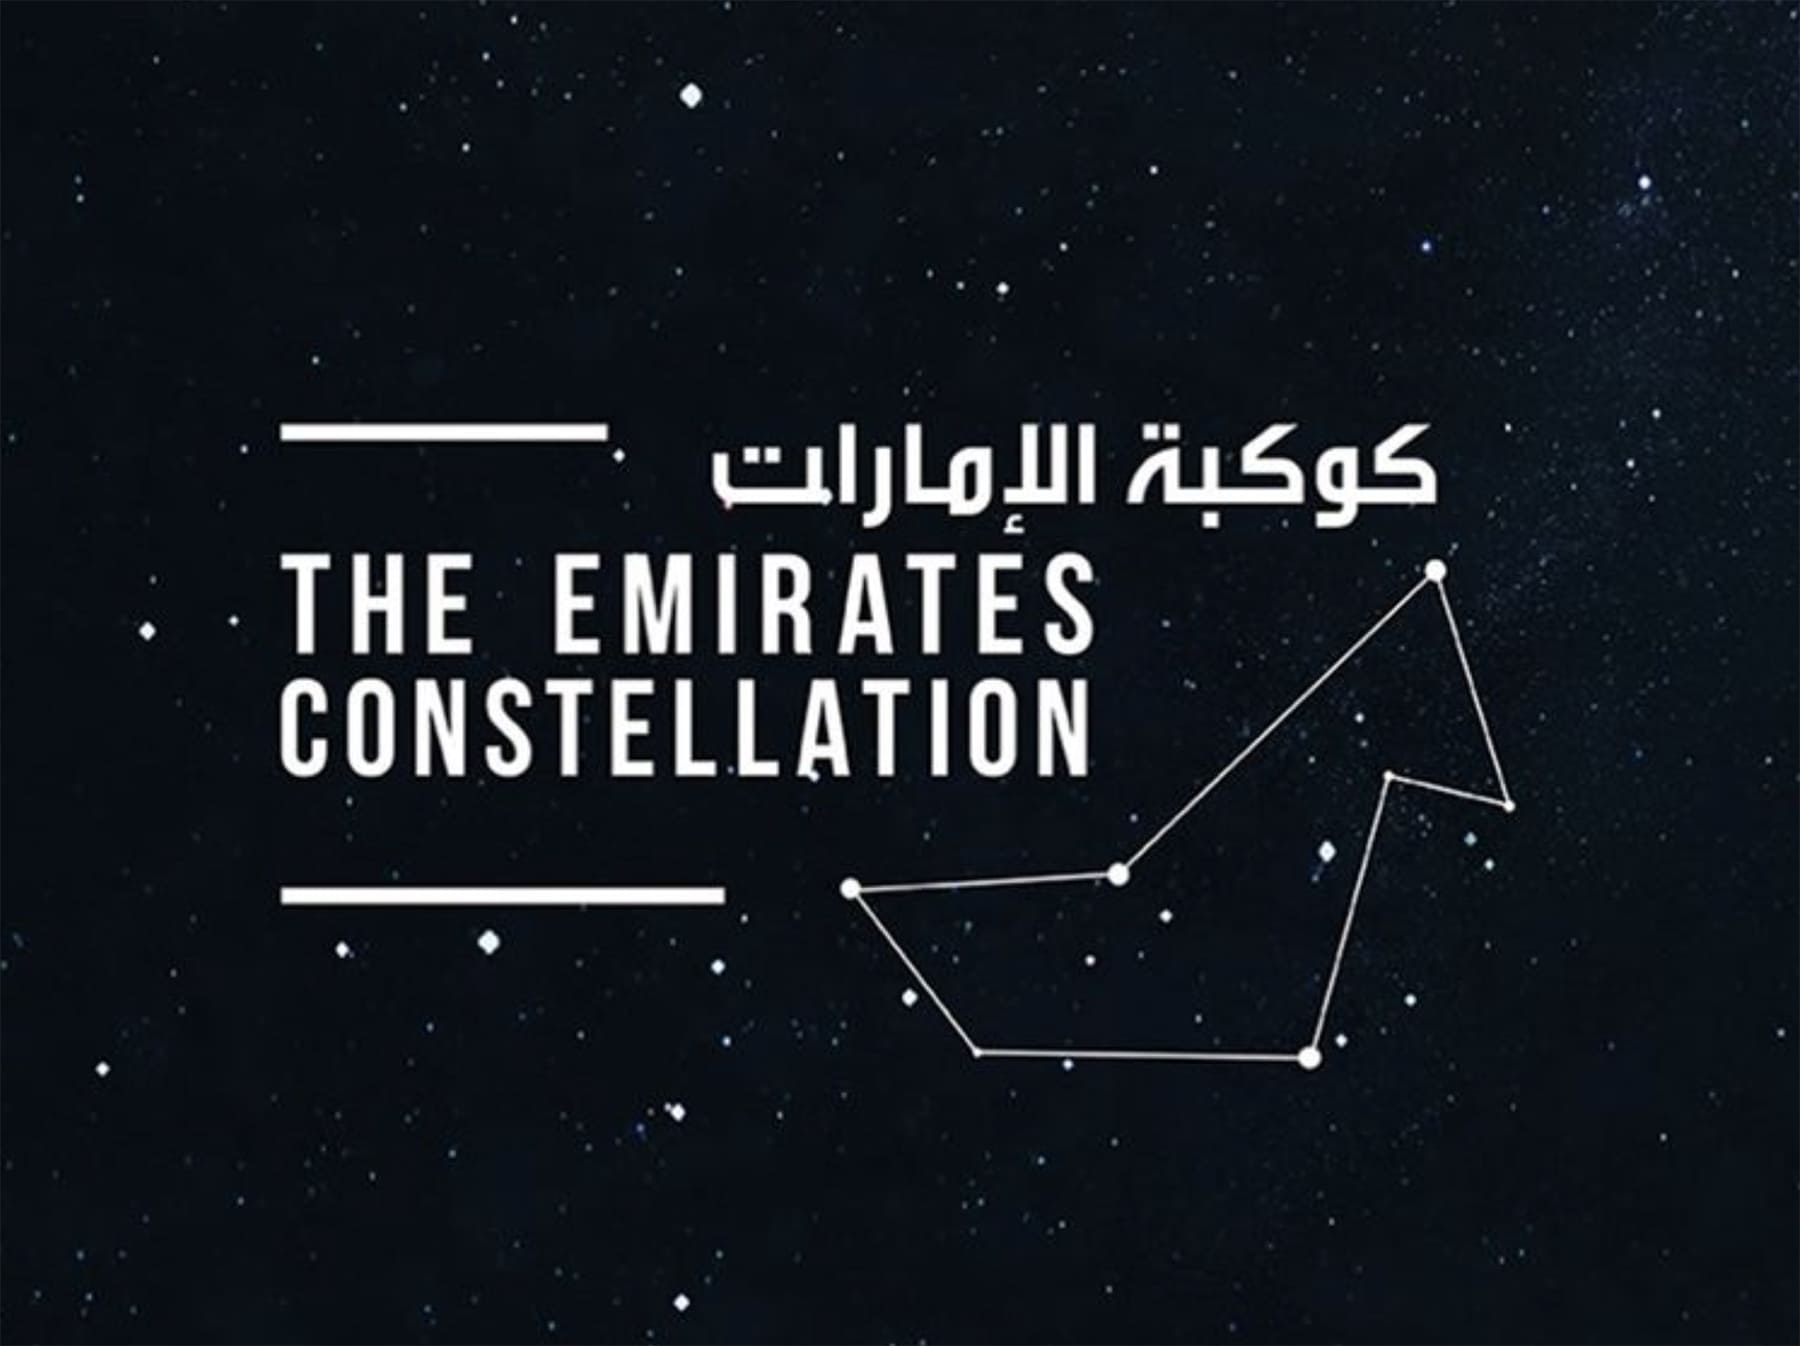 The Emirates Constellation - Très content